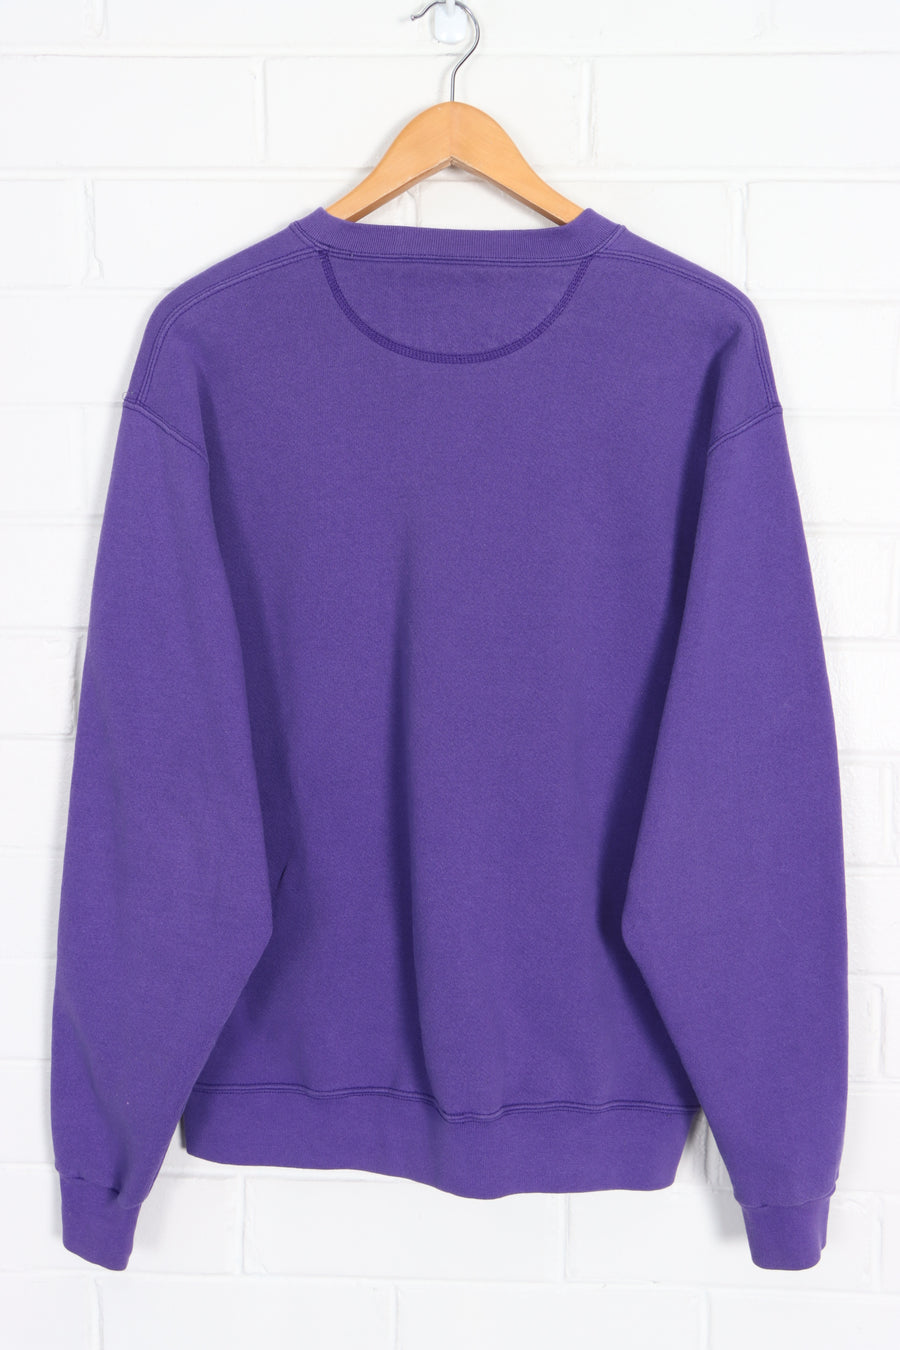 Westminster College Alumni Embroidered Purple Sweatshirt USA Made (S-M)